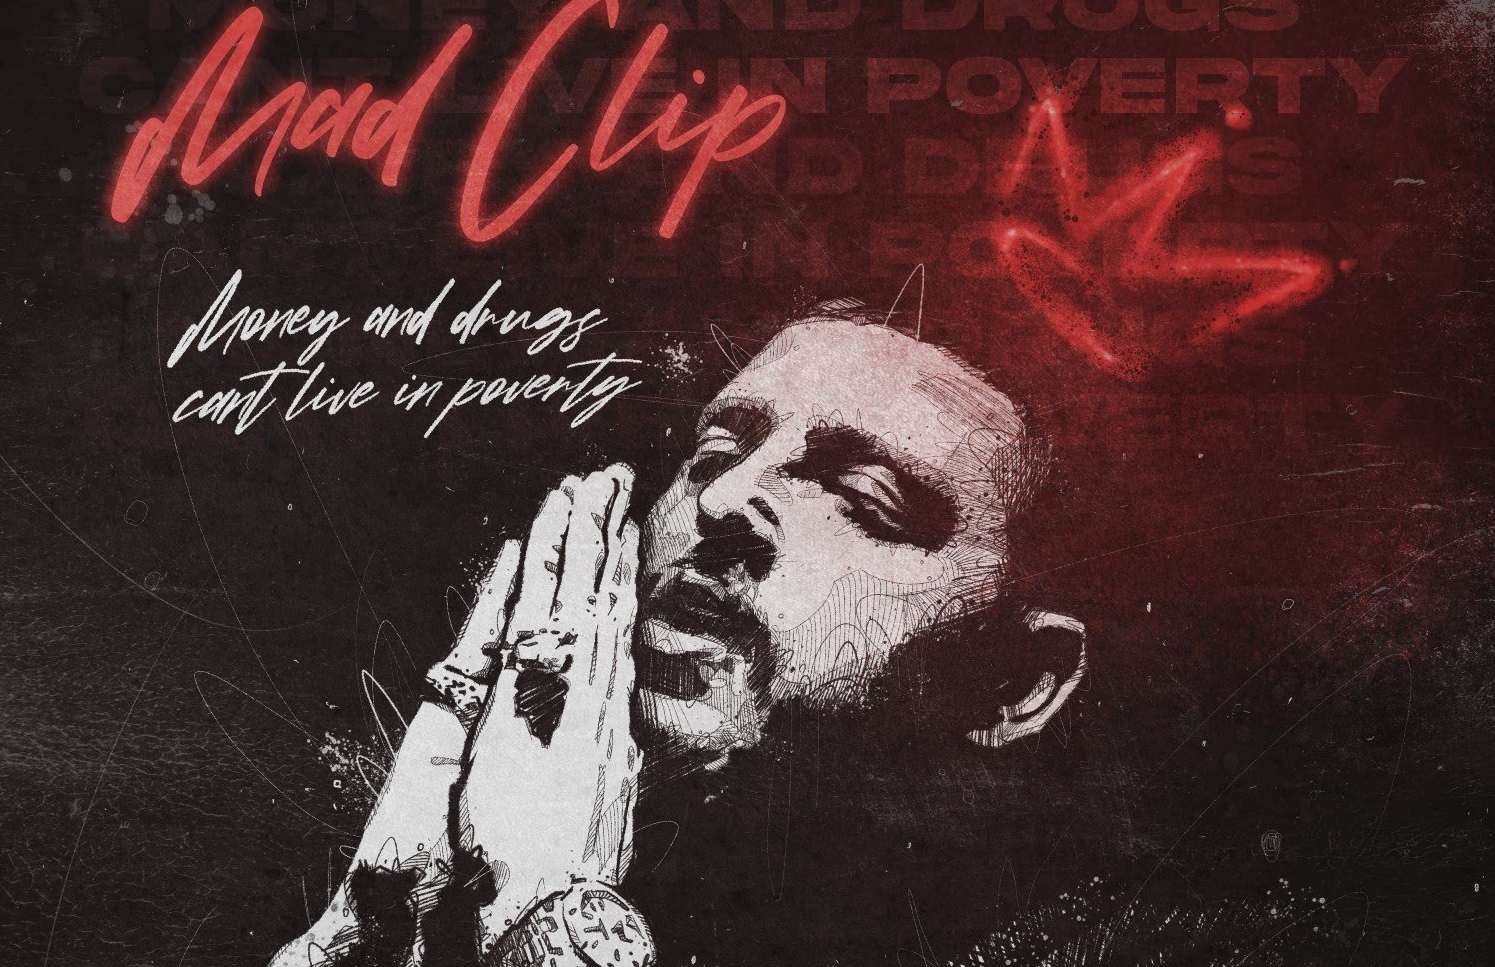 Mad Clip δίσκος: Κυκλοφόρησε το άλμπουμ του αδικοχαμένου τράπερ